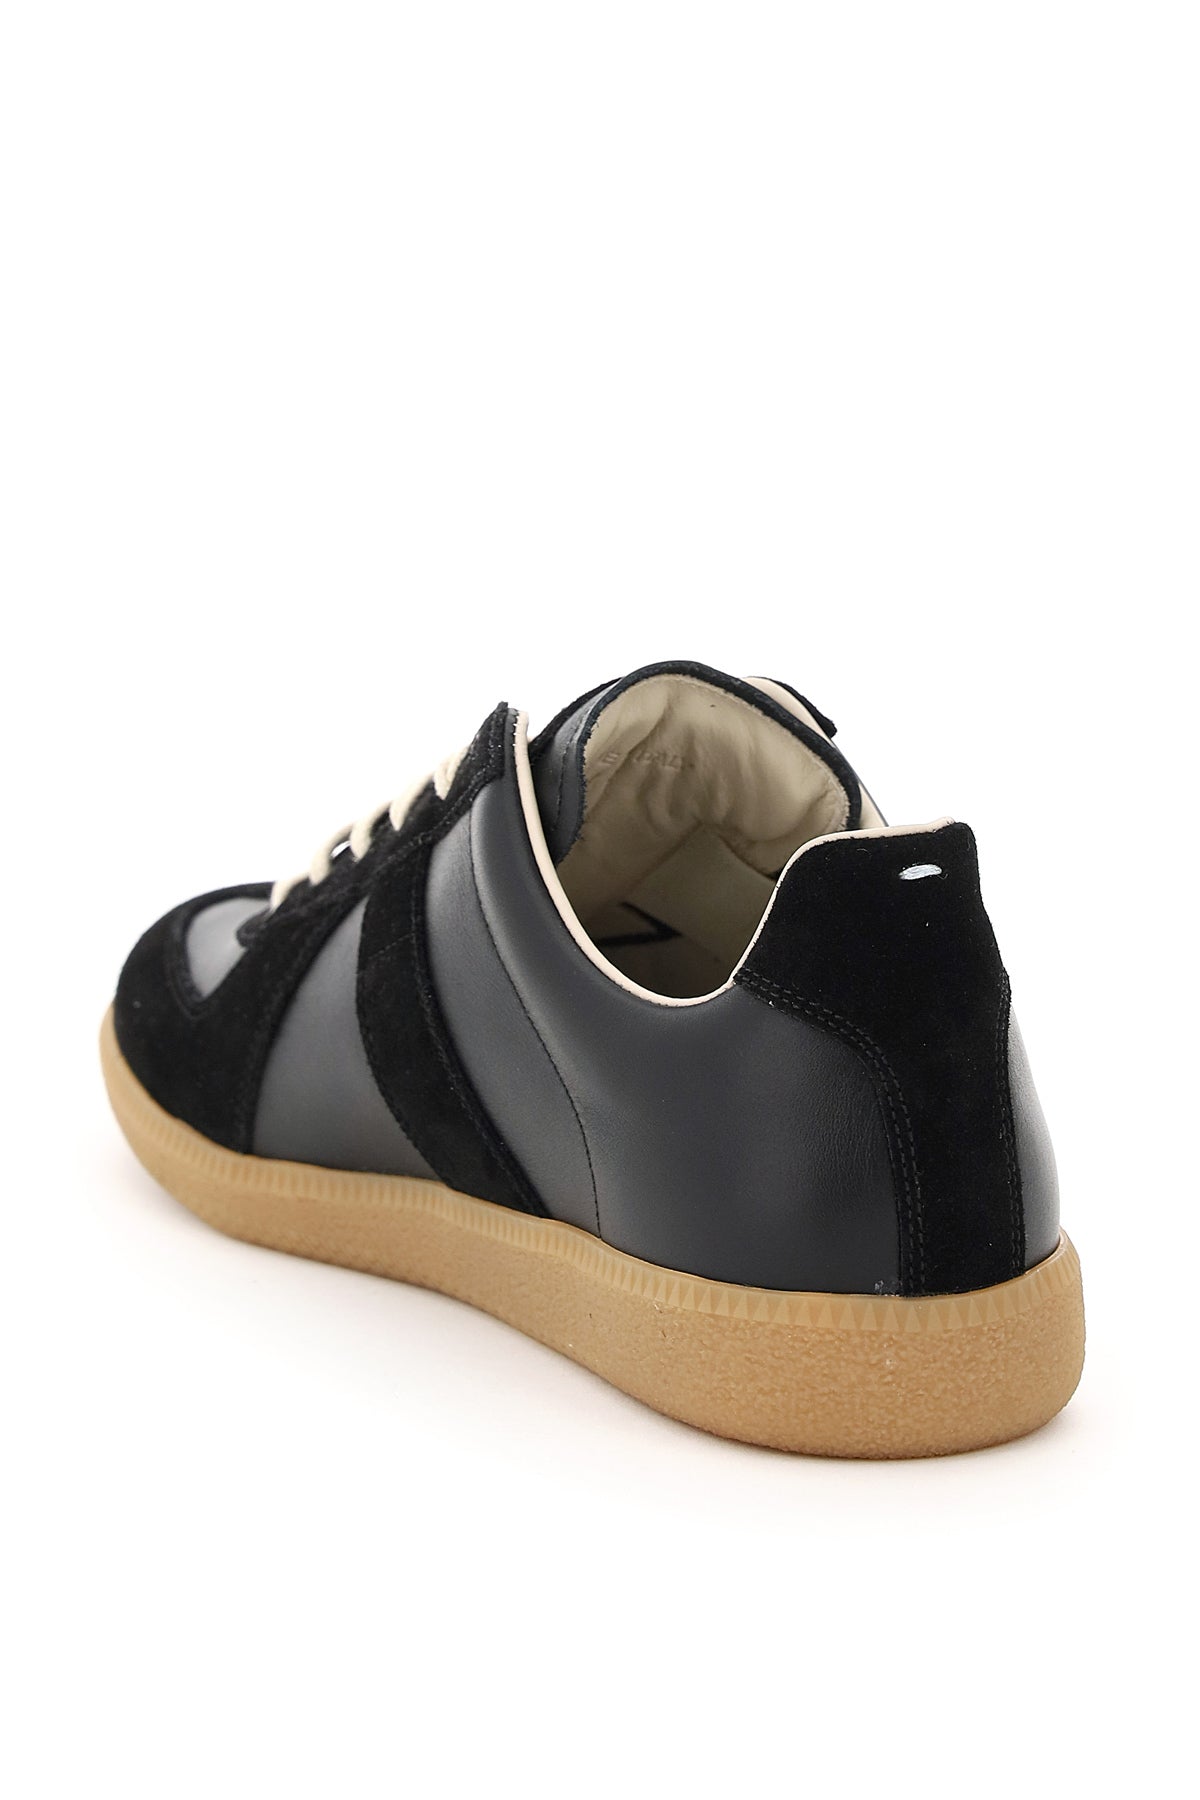 Maison margiela leather replica sneakers-2